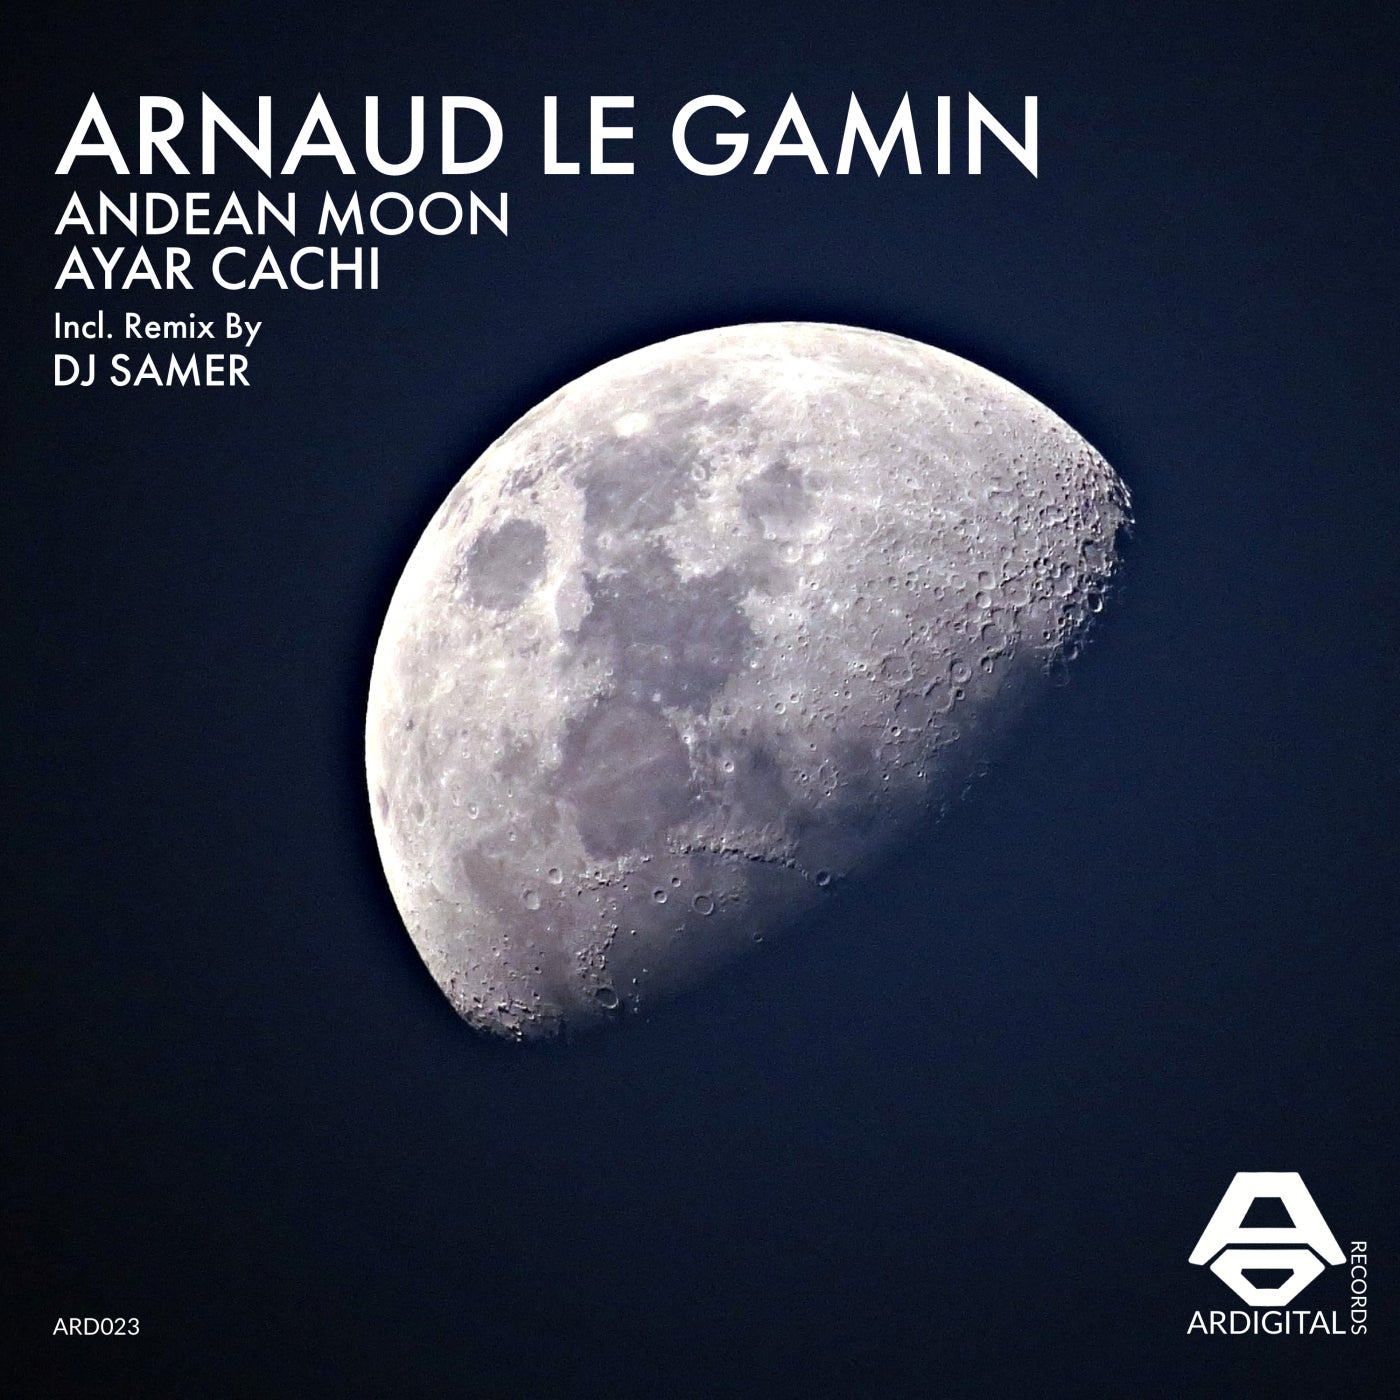 Arnaud Le Gamin - Andean Moon [ARD023]